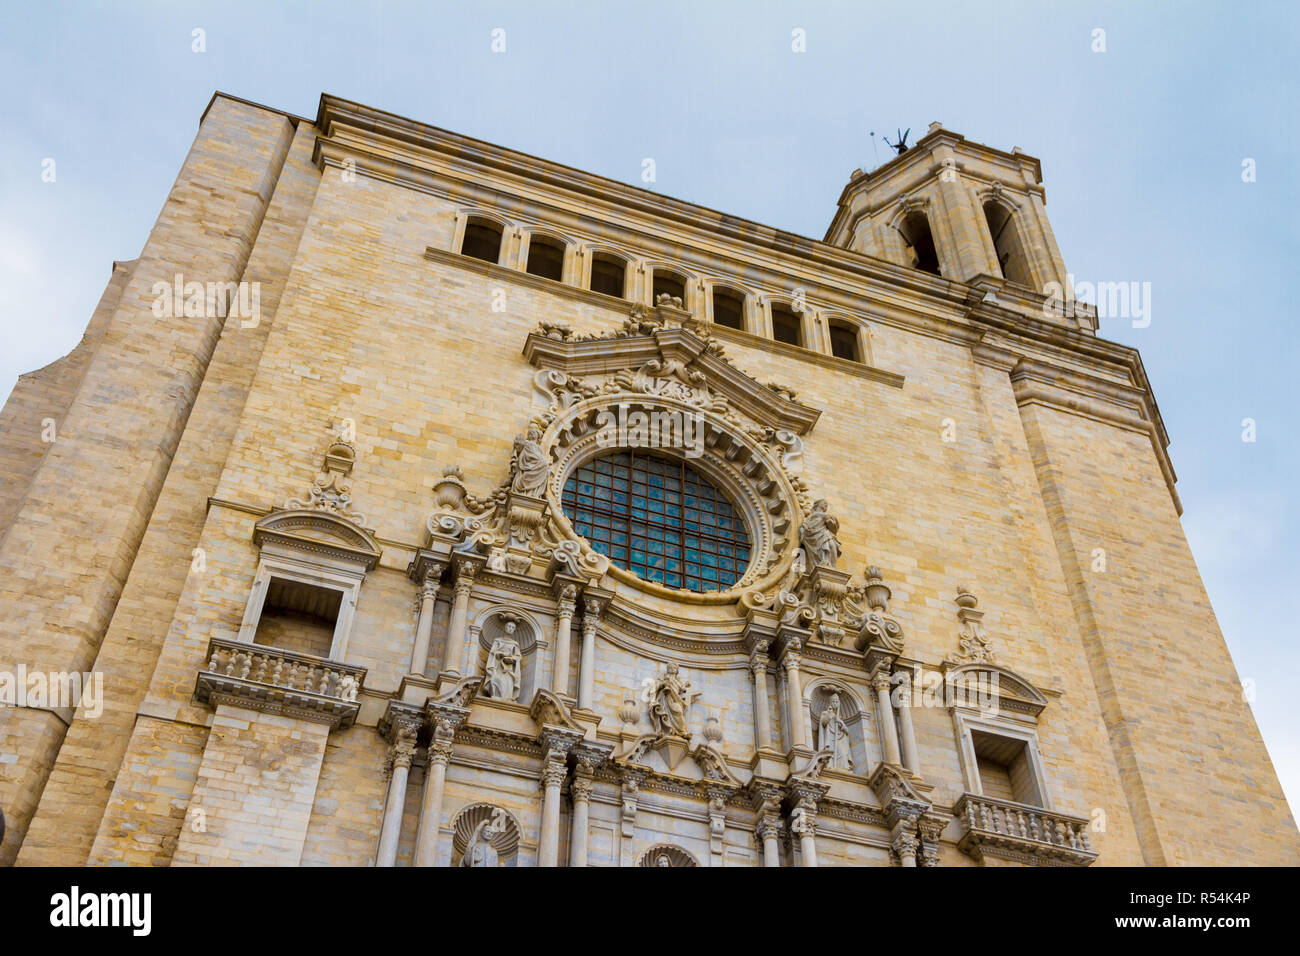 La Catedral de Girona, es una iglesia católica romana situada en Girona,  Cataluña, España Fotografía de stock - Alamy